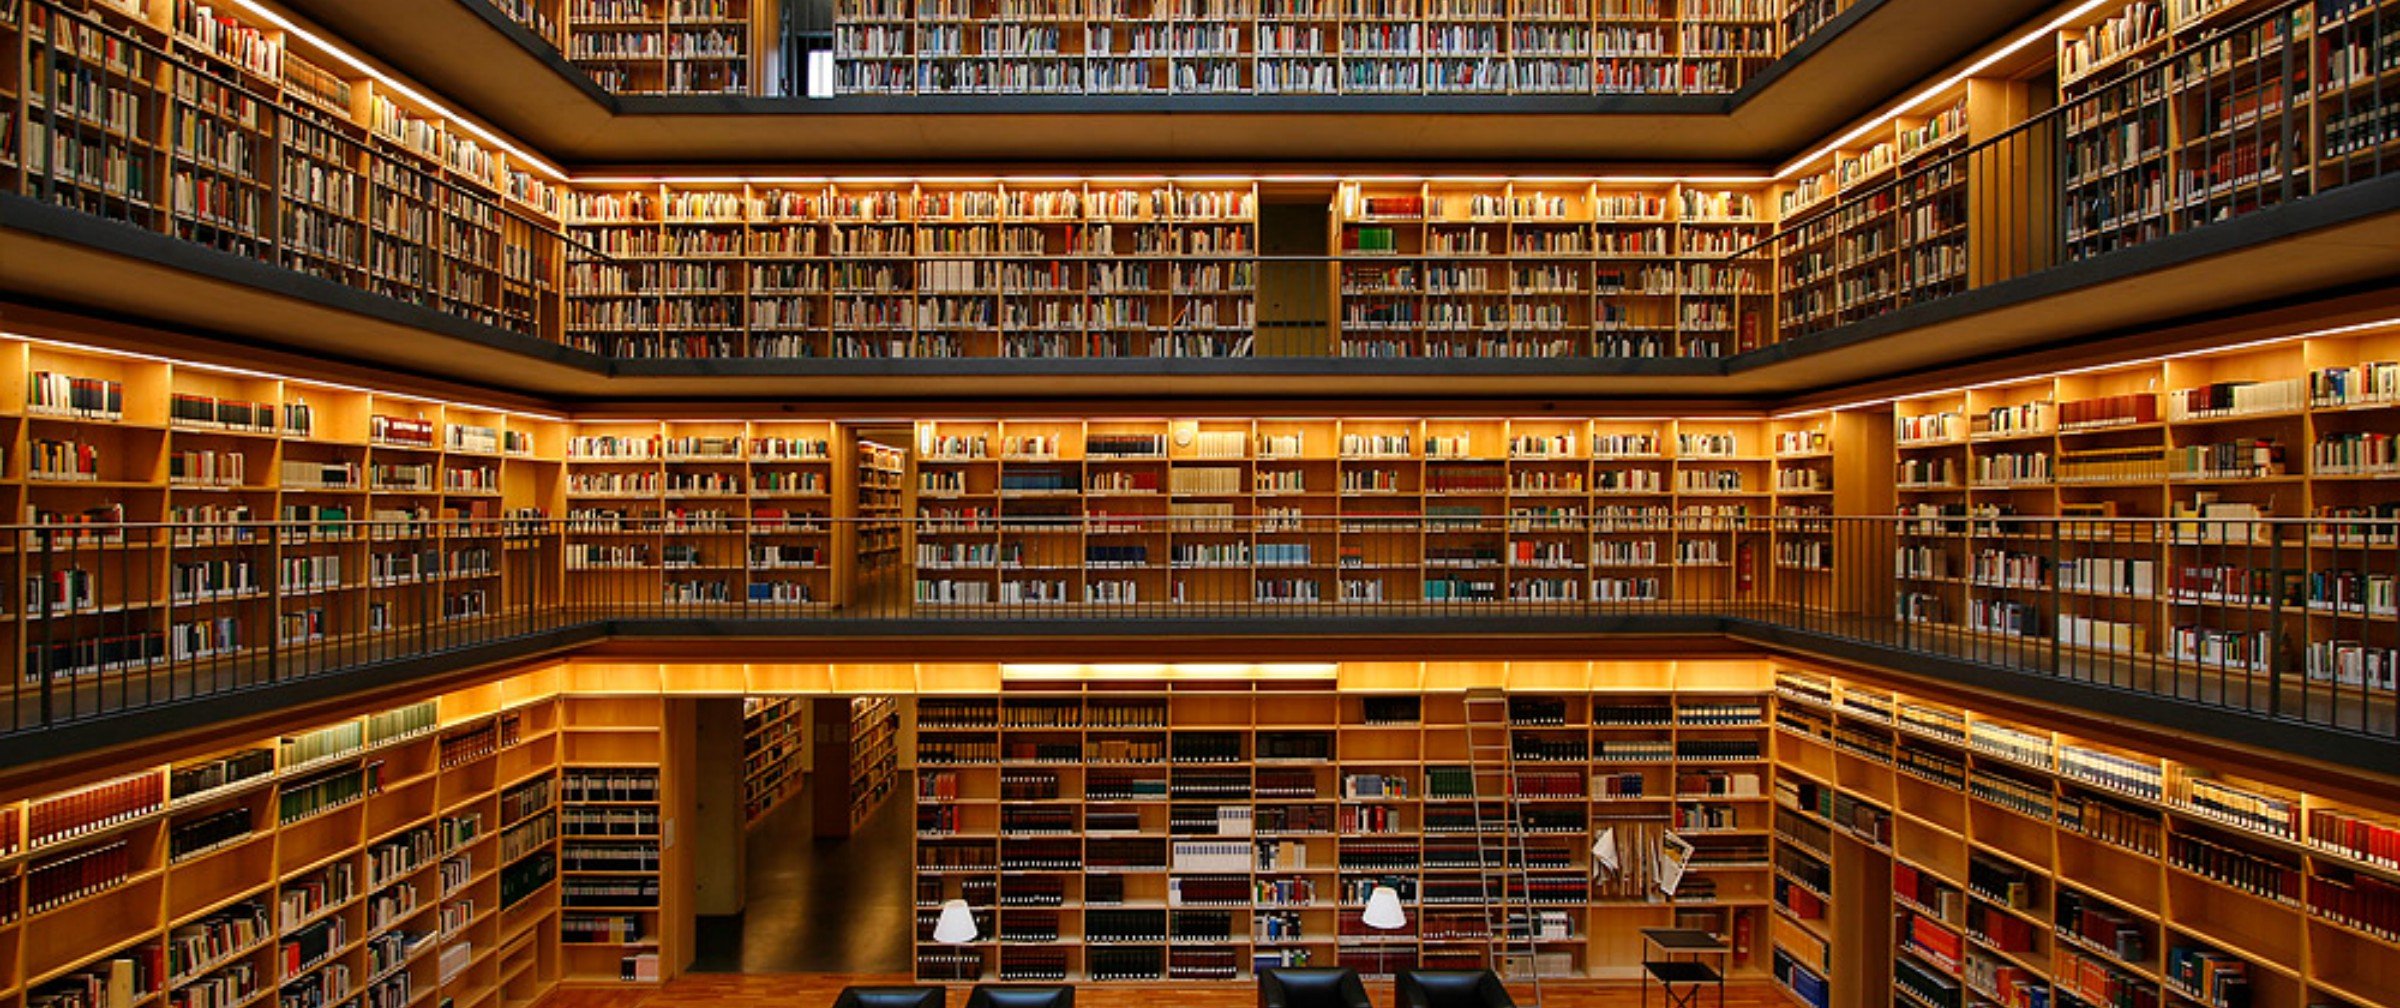 Attachment library. 19-Ярусное книгохранилище РГБ. Библиотека Phillips Exeter. Красивая библиотека. Большая библиотека.